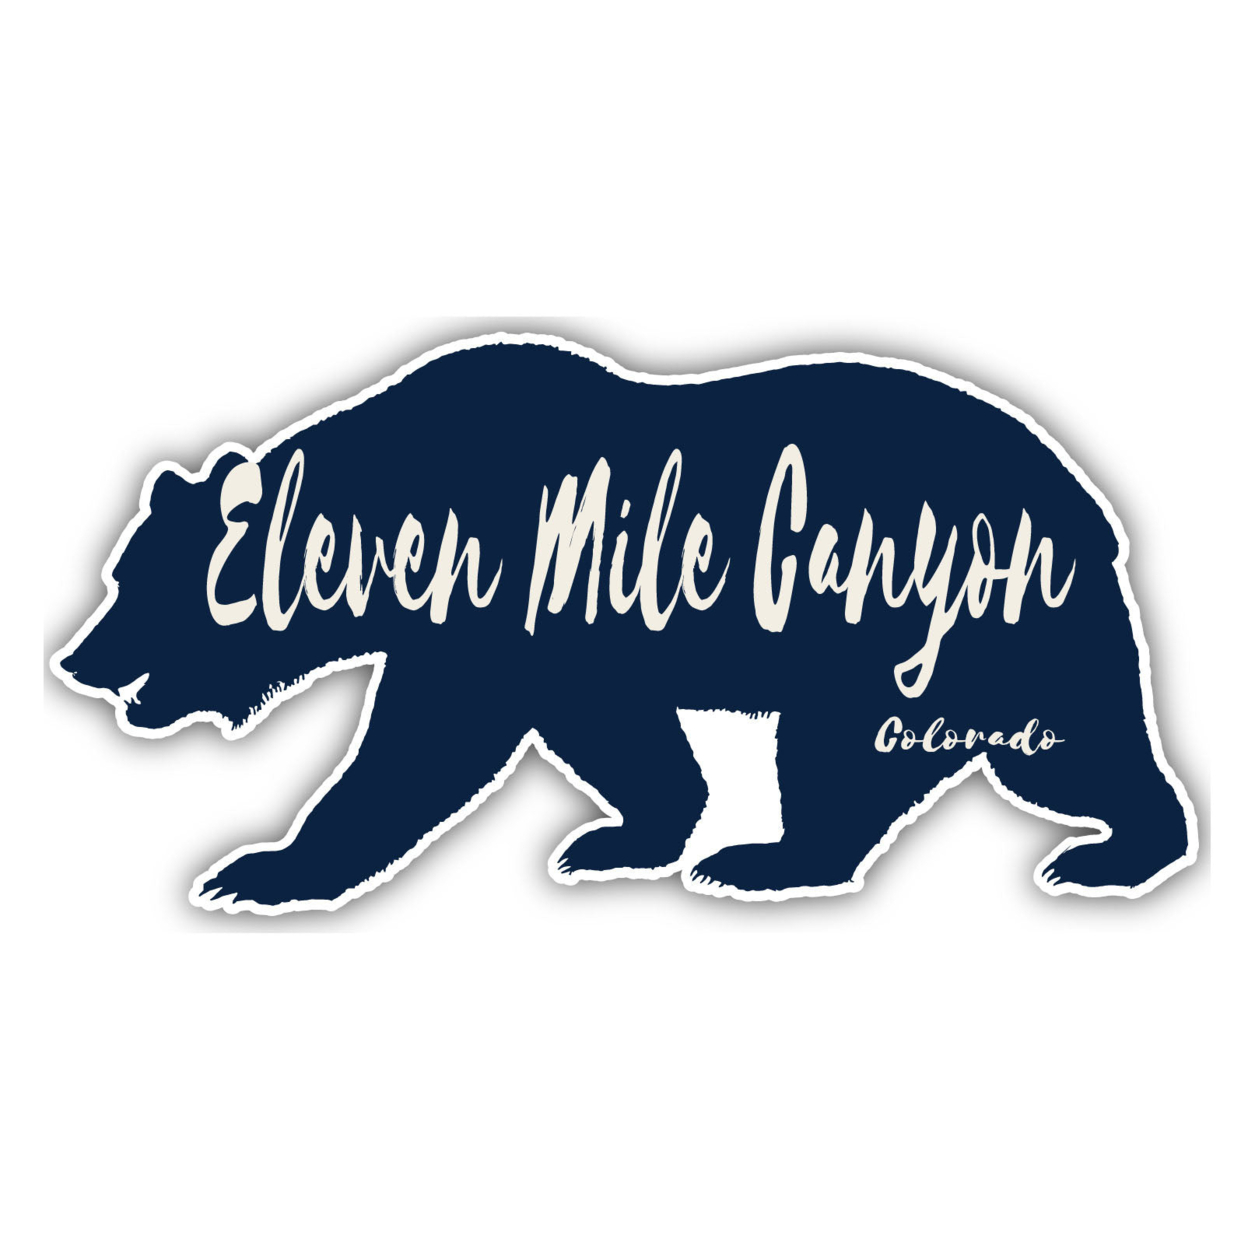 Eleven Mile Canyon Colorado Souvenir Decorative Stickers (Choose Theme And Size) - Single Unit, 6-Inch, Bear